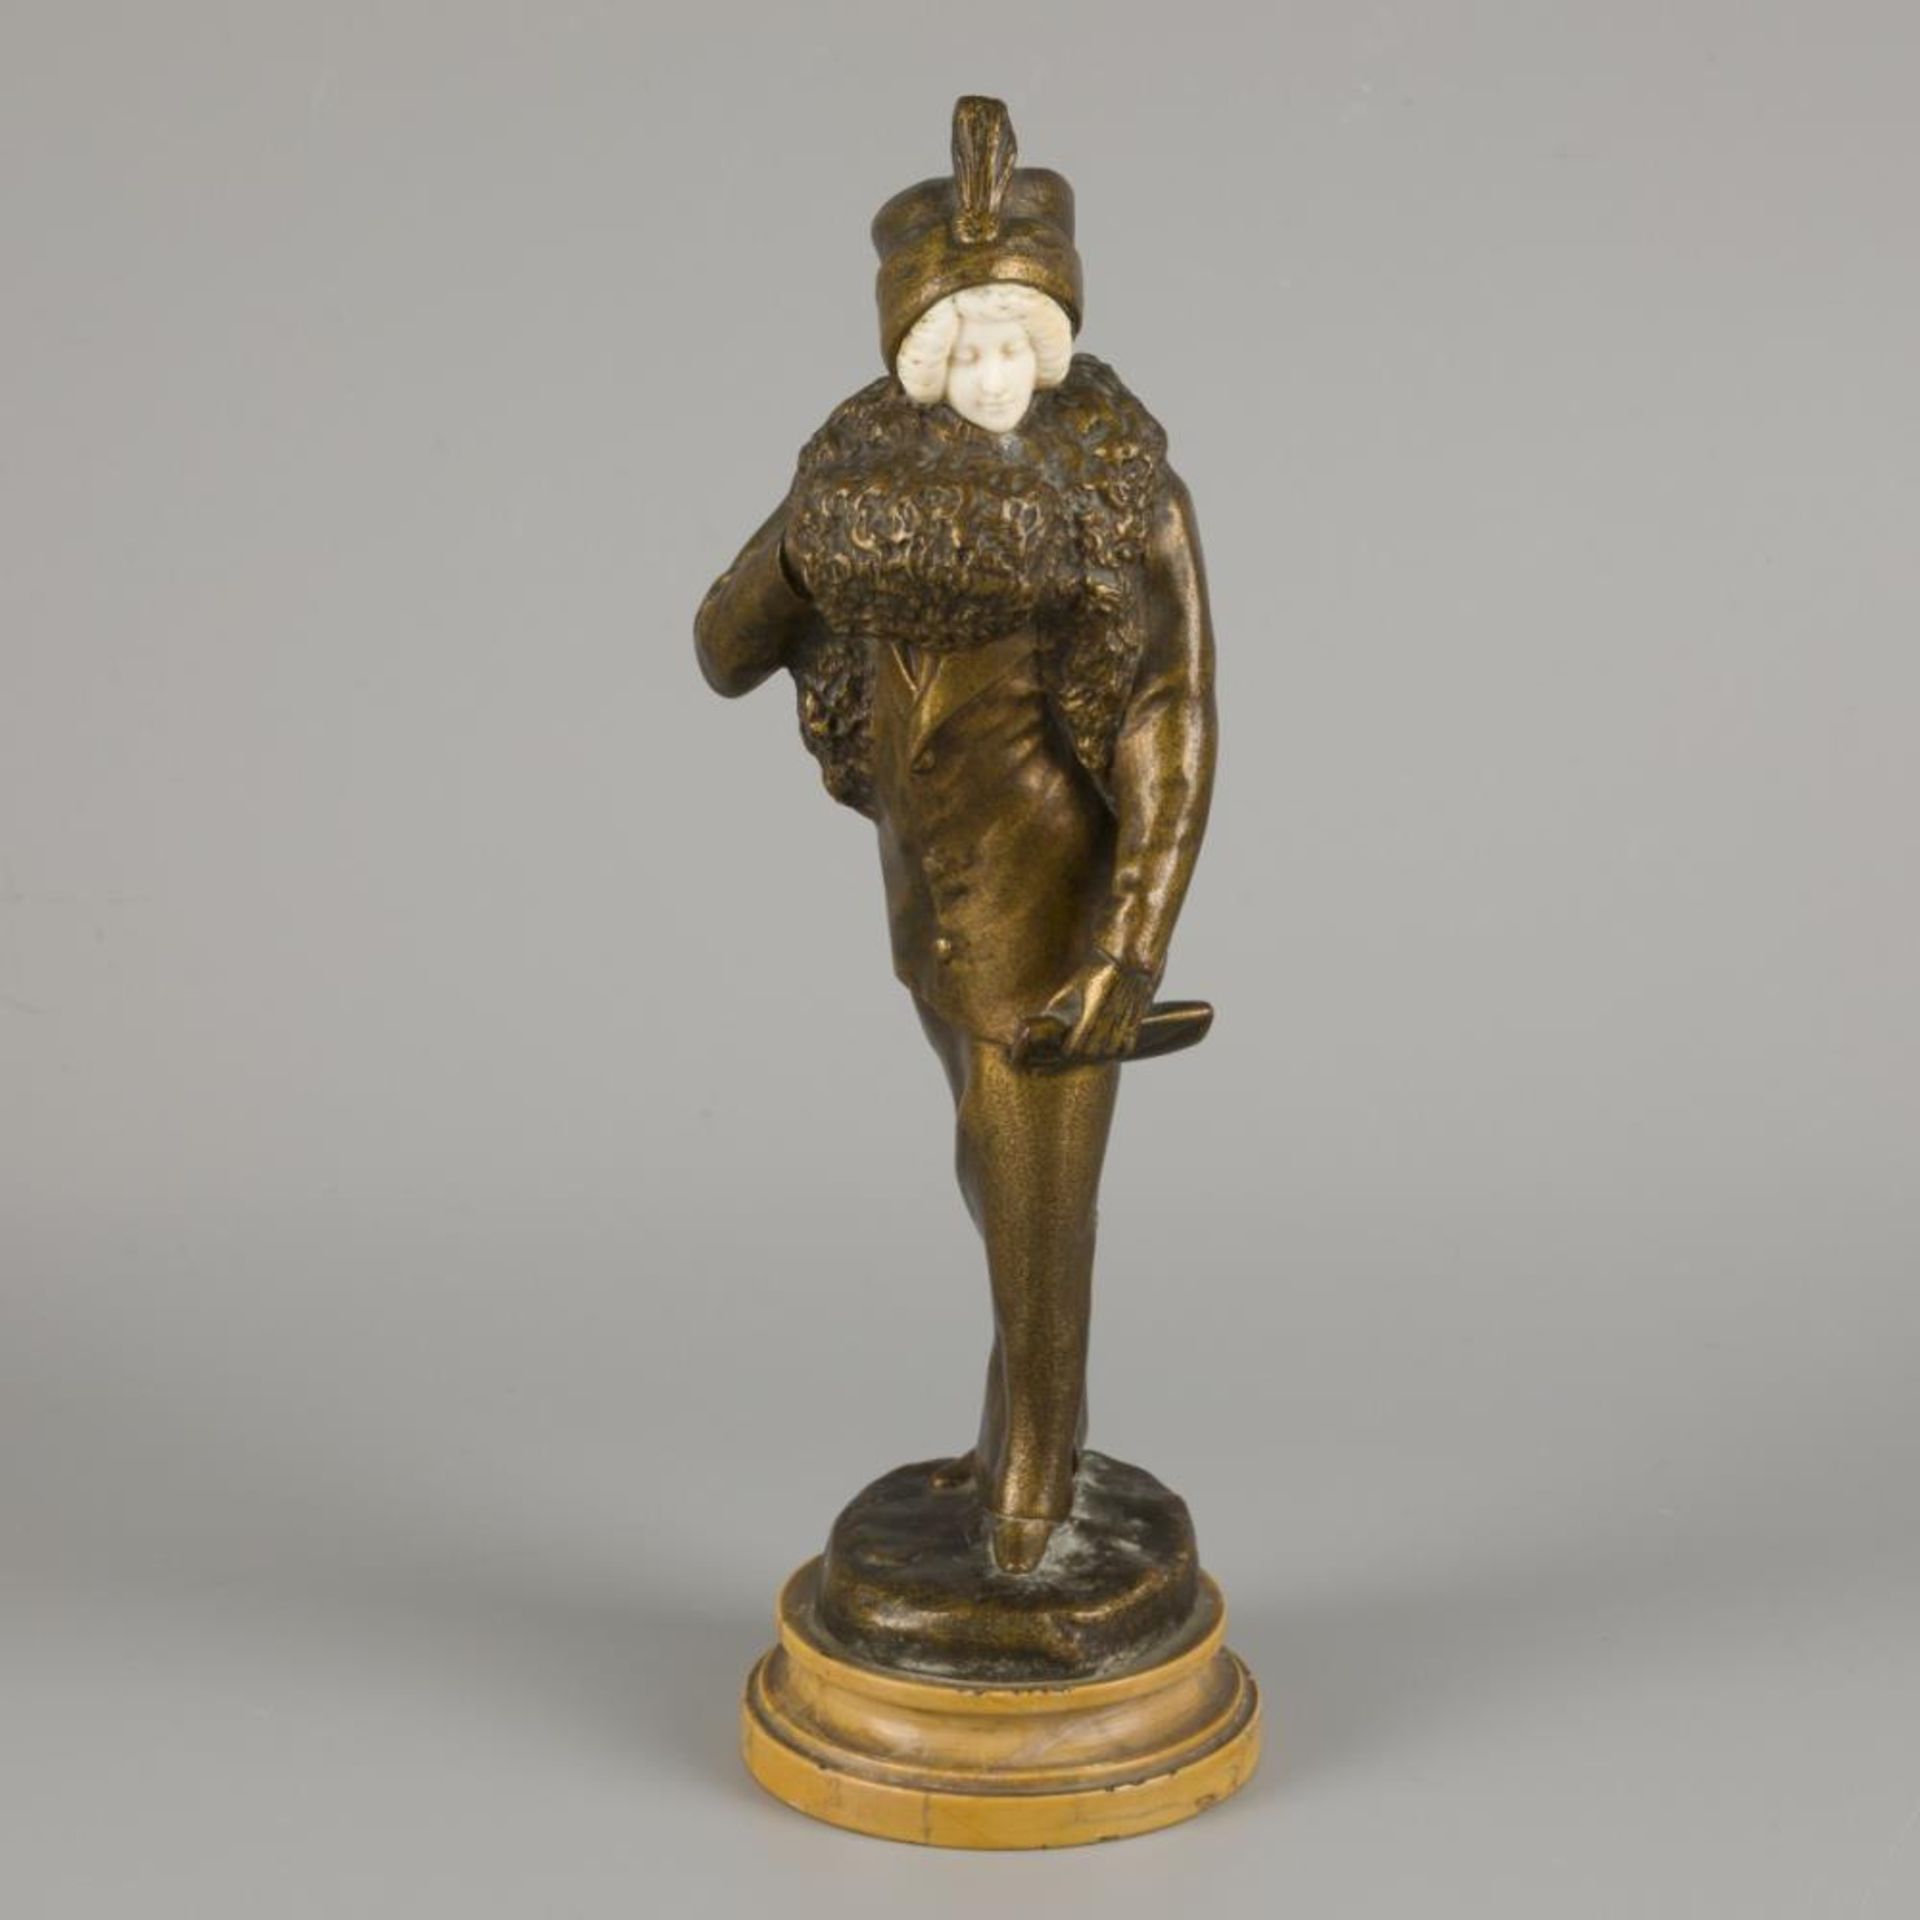 E. Thomasson (XIX-XX), A bronze sculpture of an elegant lady with a fur muff, Belgium, ca. 1900.